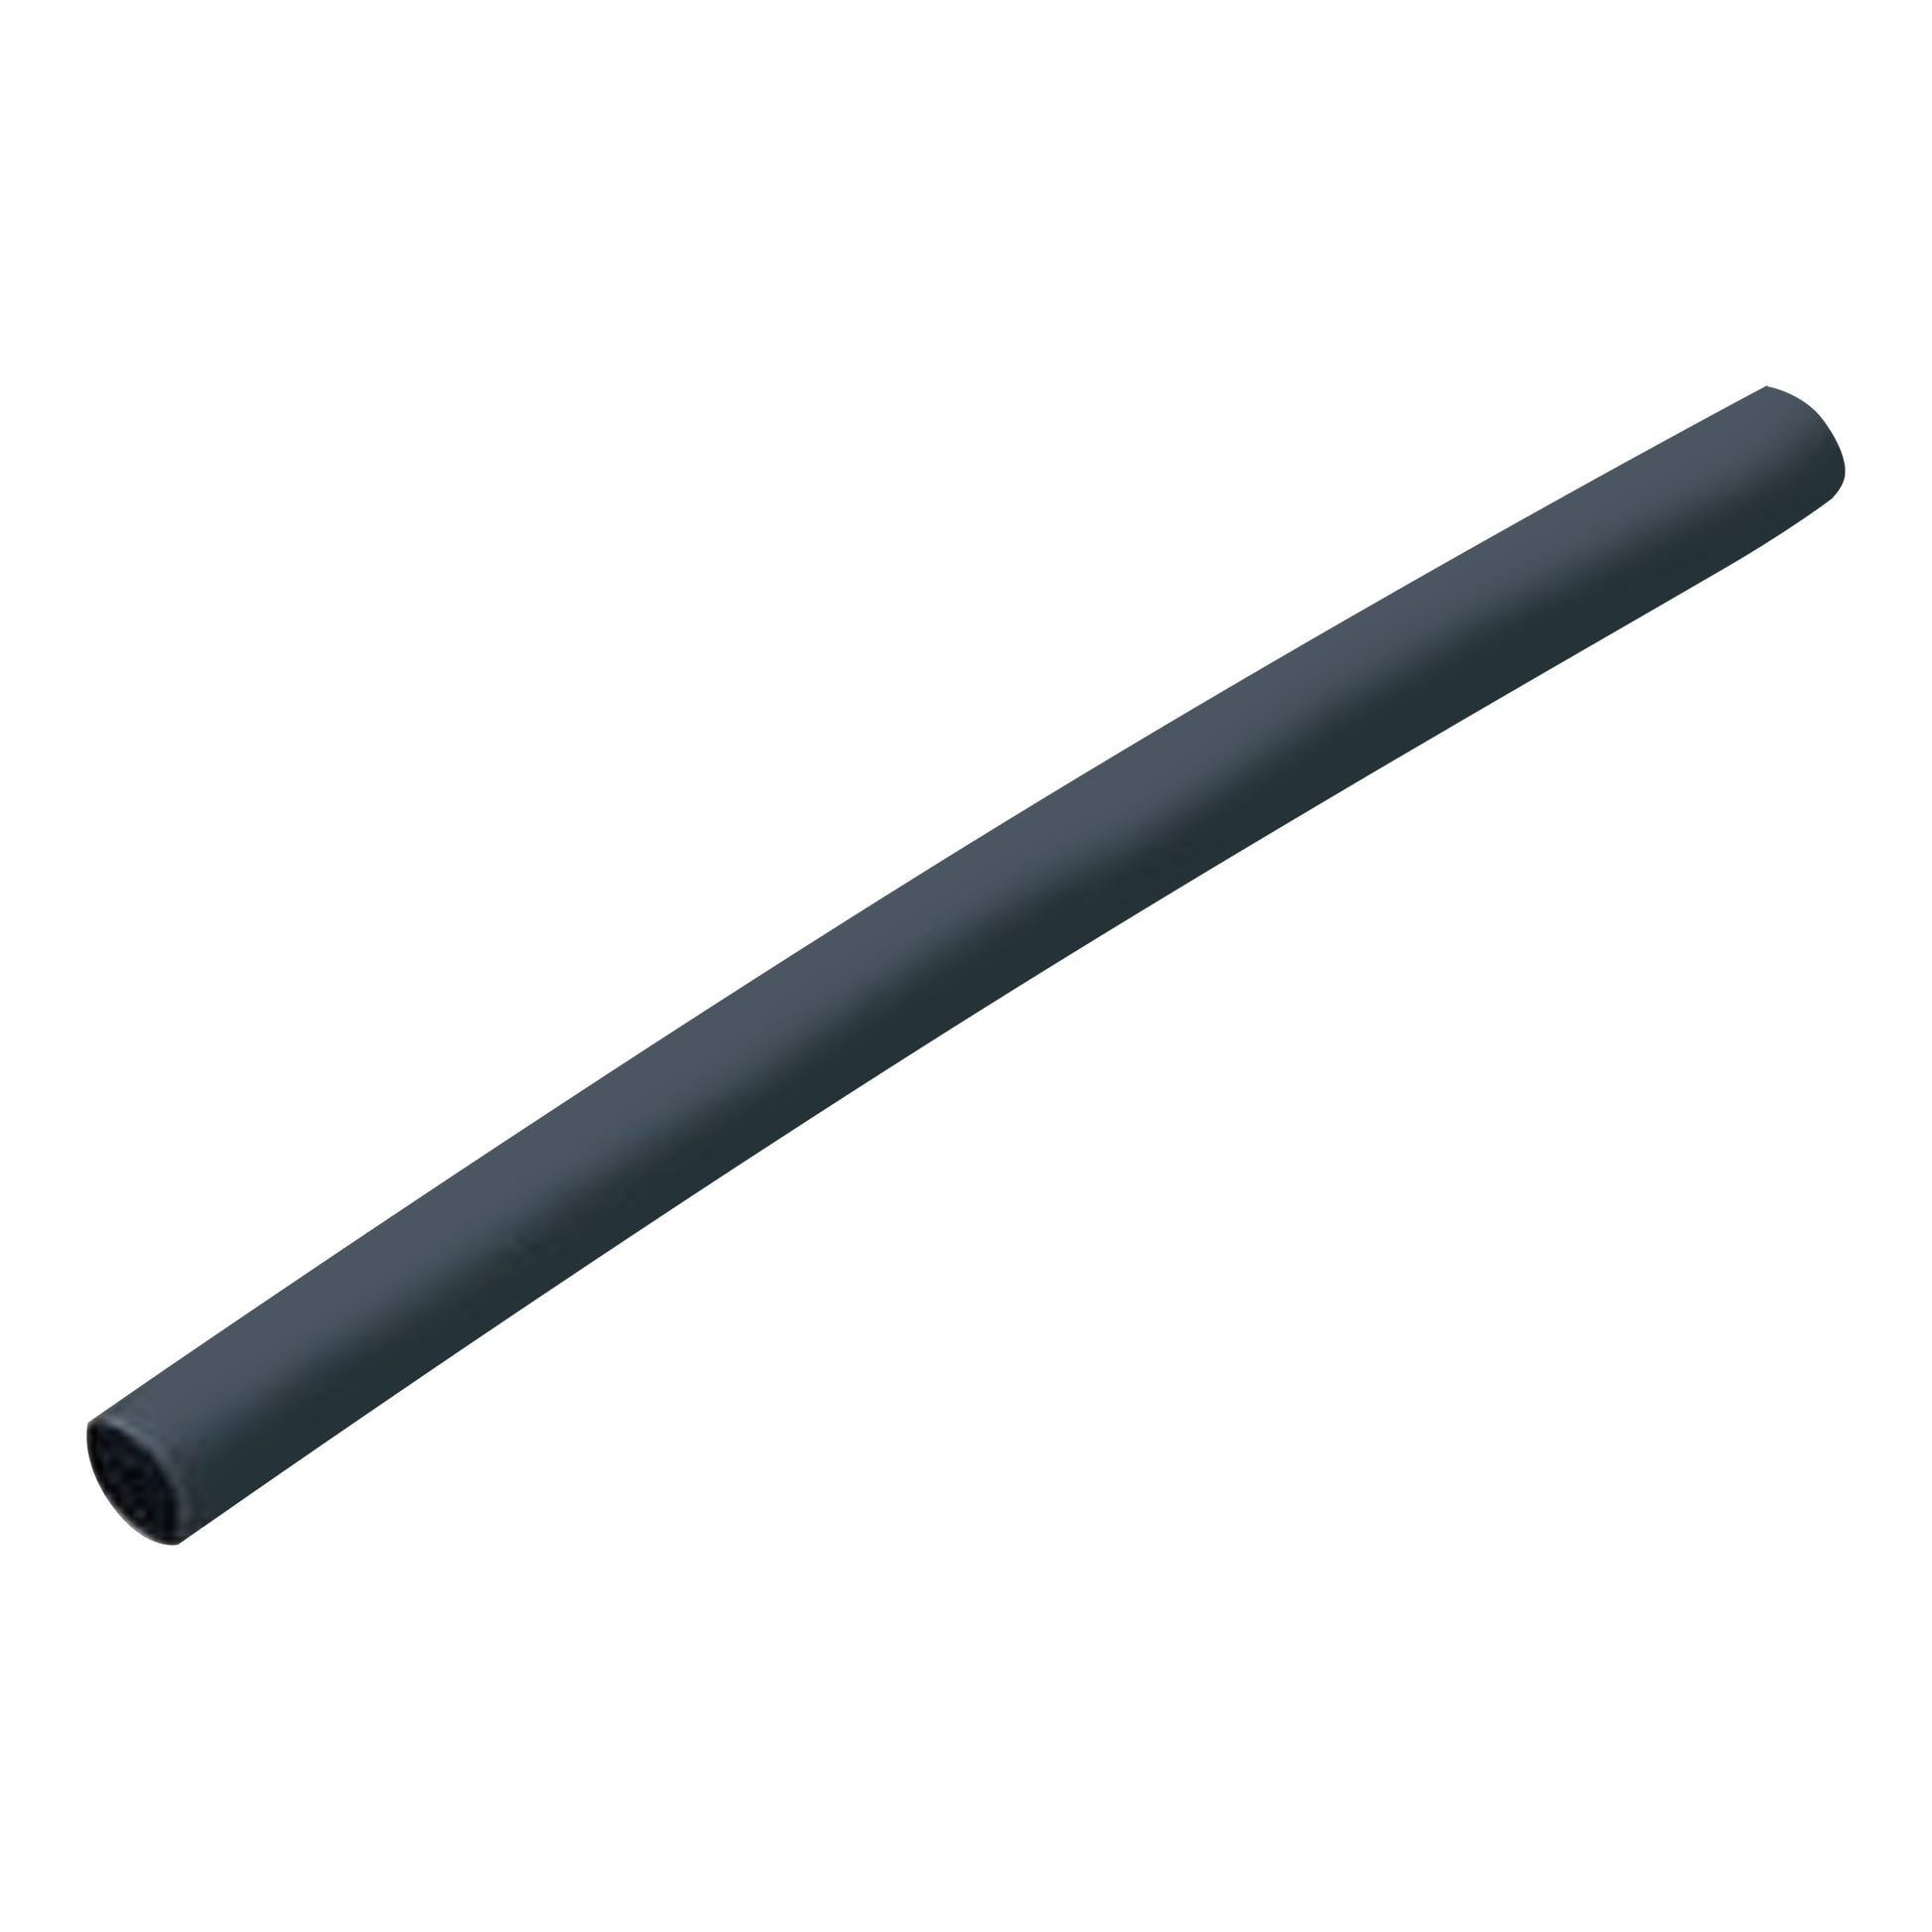 Flexible Thin Single Wall Non-Adhesive Heat Shrink Tubing 2:1 Black 1/16" ID - 12" Inch 10 Pack